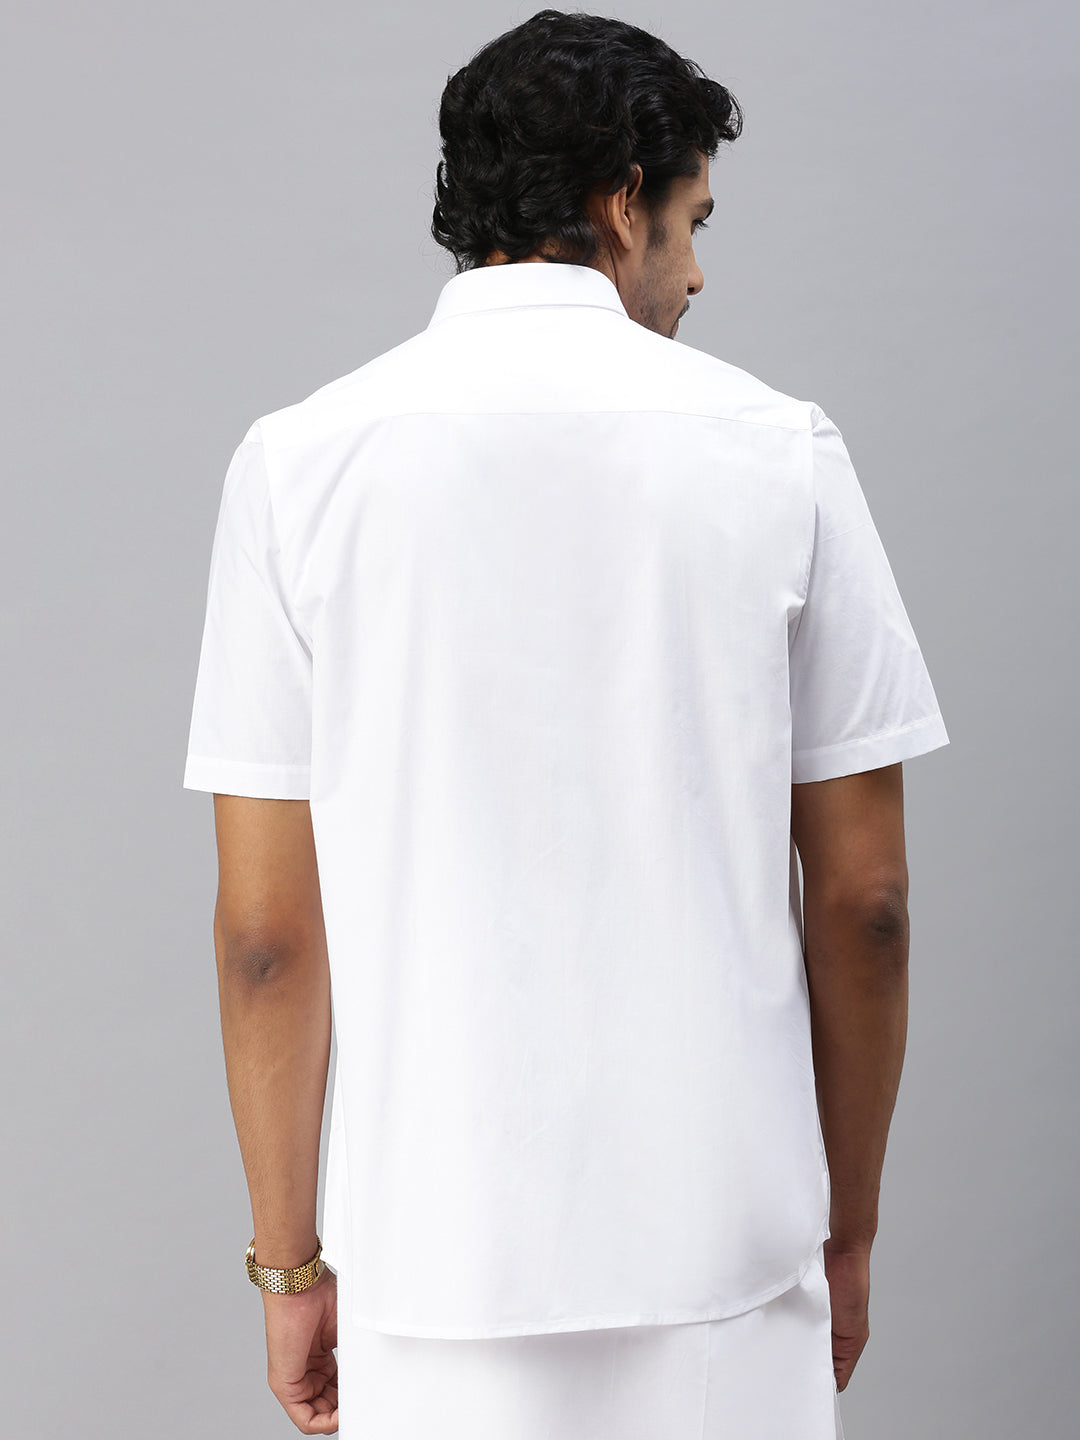 Mens 100% Cotton White Shirt Half Sleeves Breeze Cotton -Back view